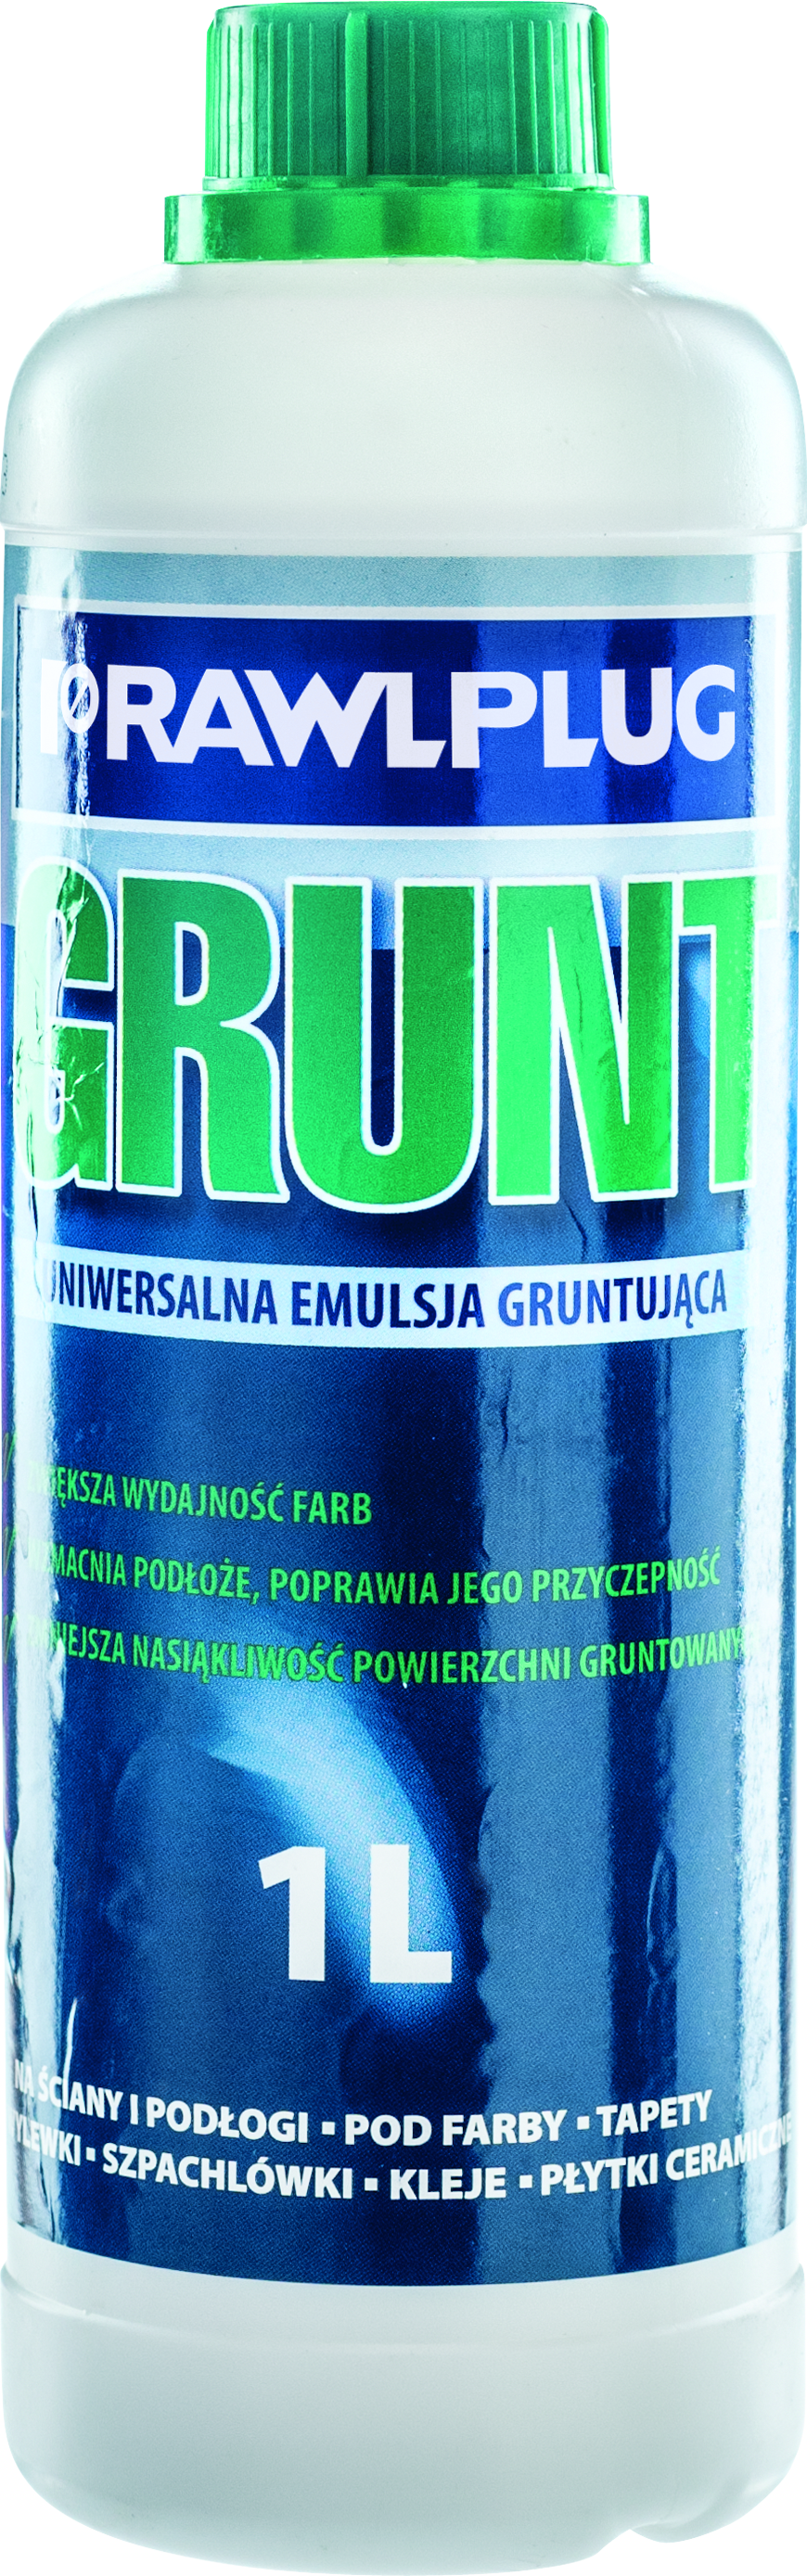 RGU Universal priming emulsion